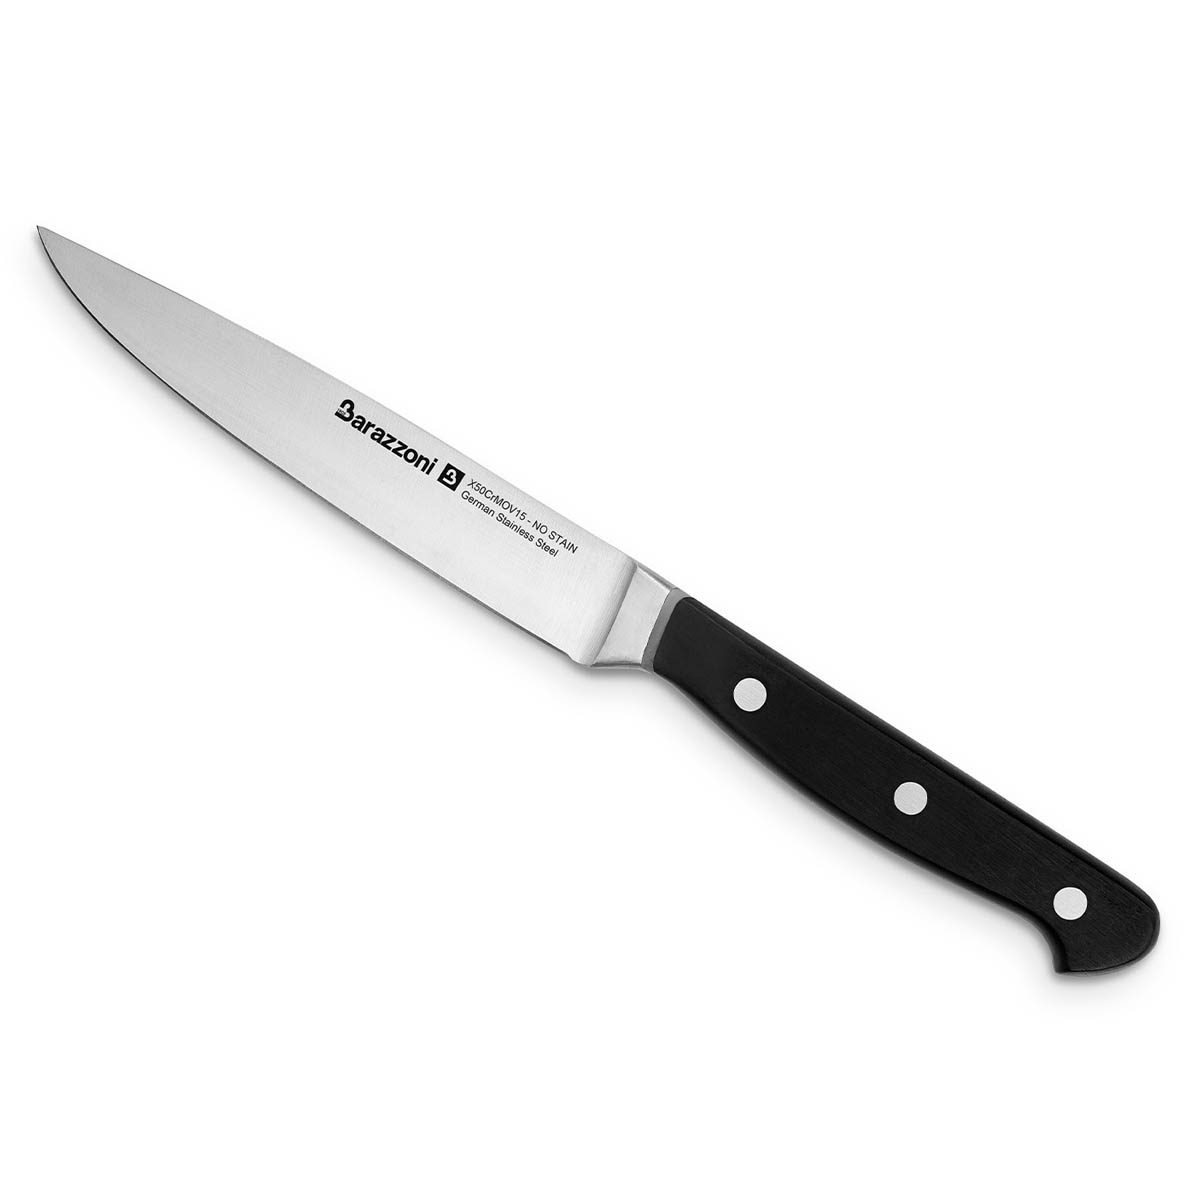 Нож универсальный Barazzoni Barazzoni 802170045, цвет серебристый